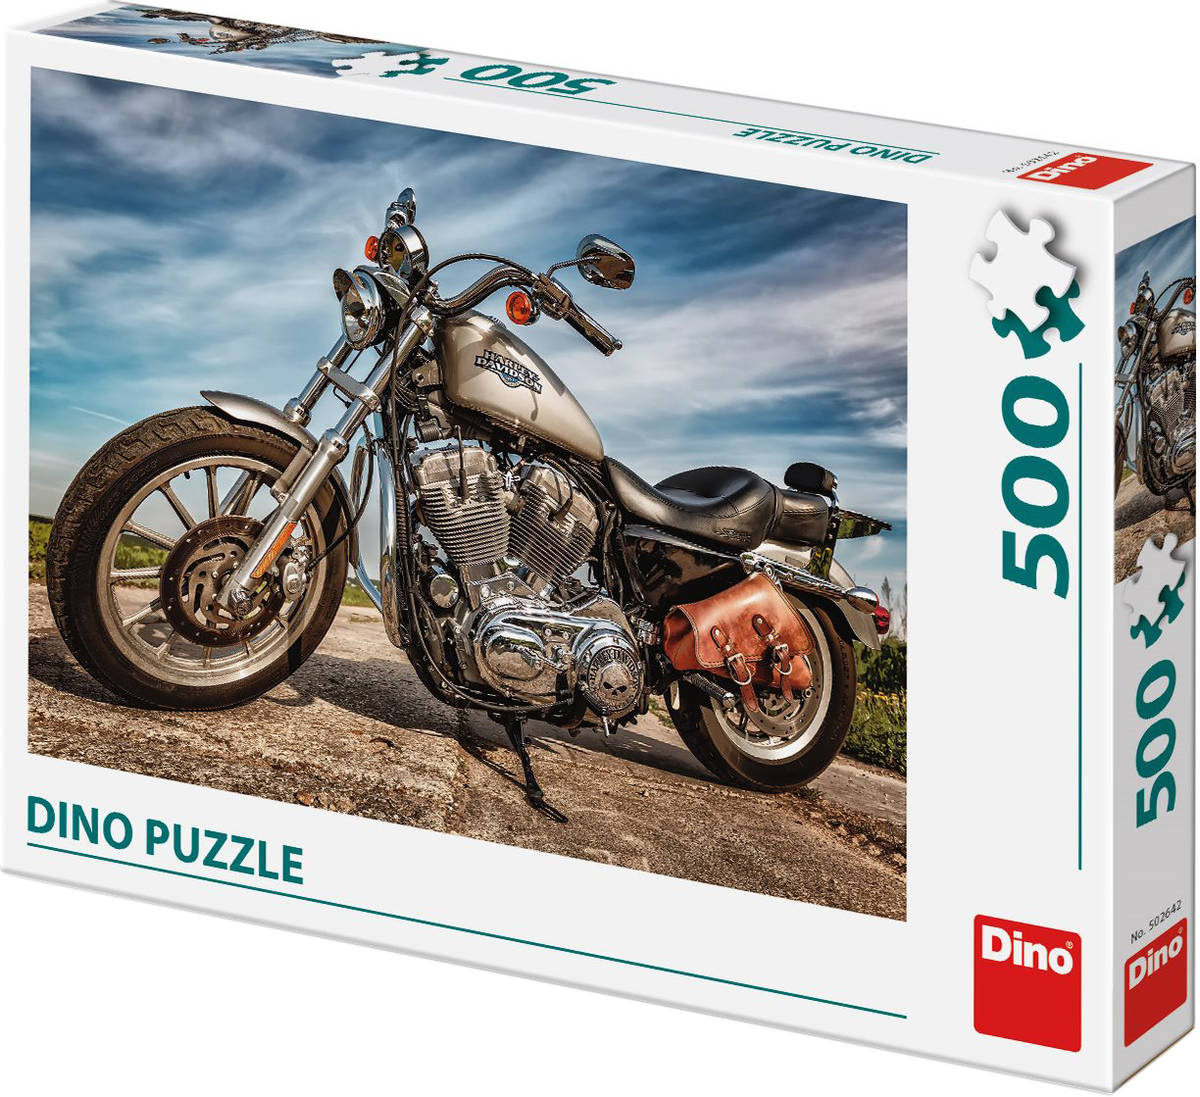 Fotografie DINO Puzzle Harley Davidson 47x33cm foto skládačka 500 dílků v krabici